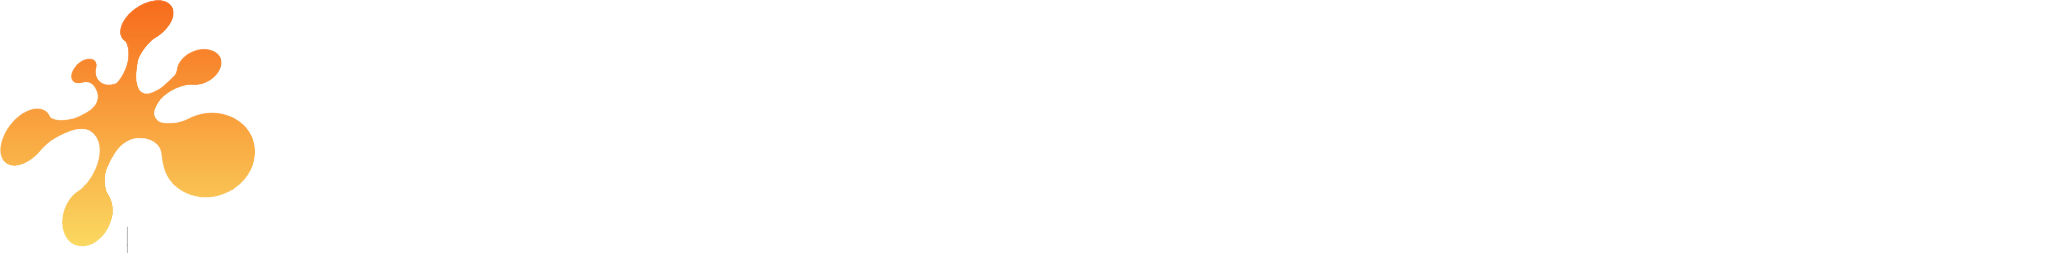 Xtreme Servers Logo